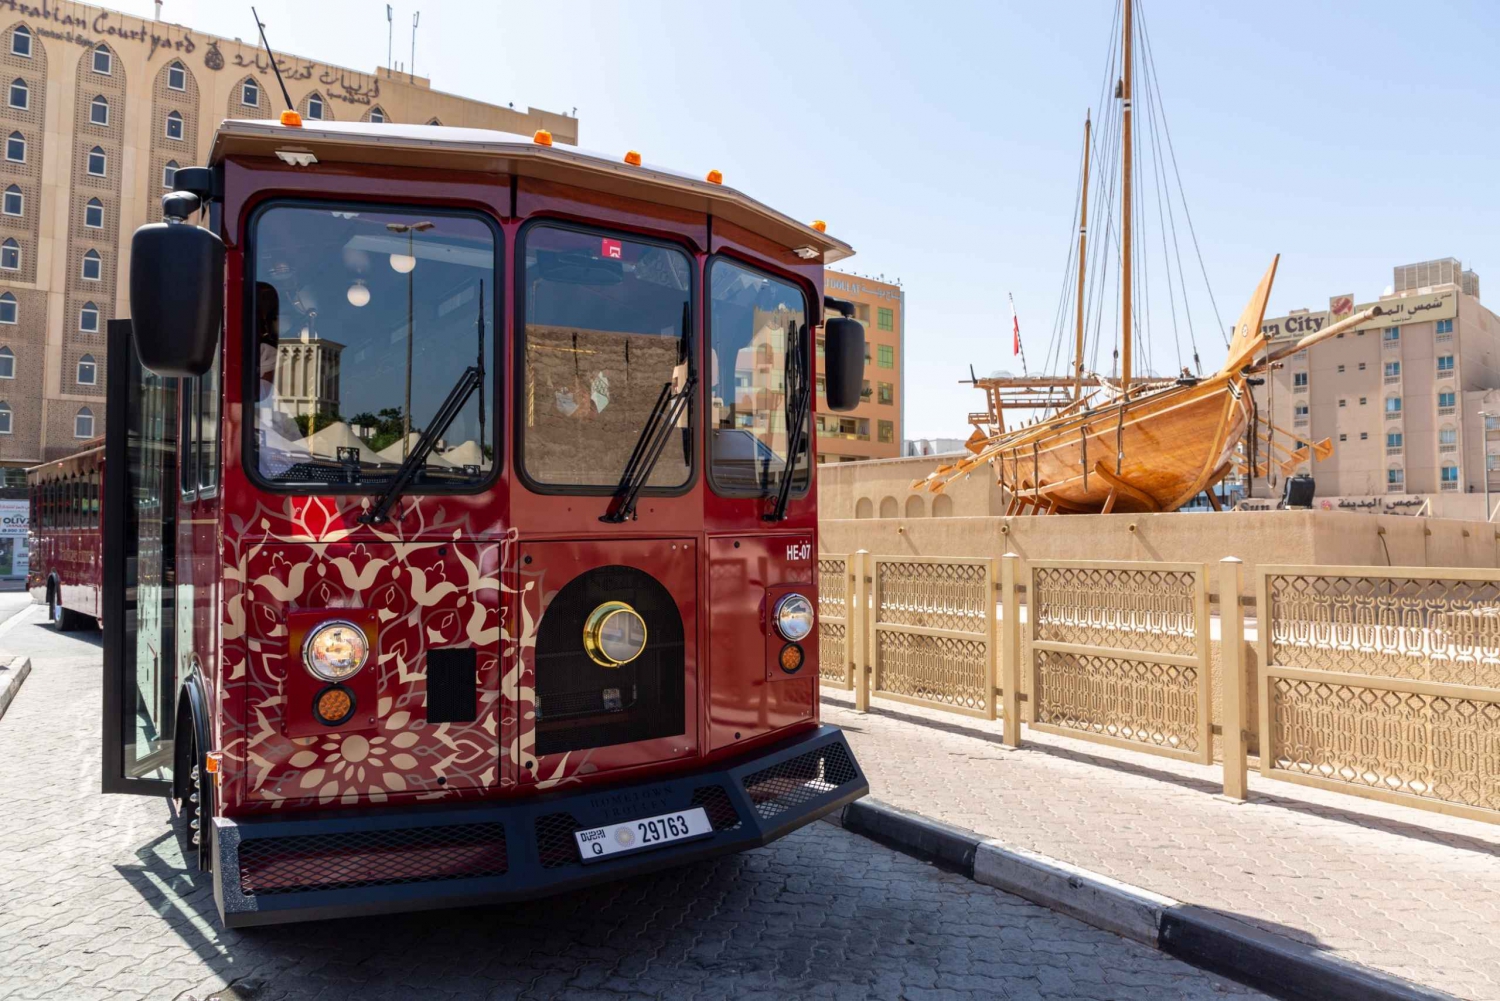 Dubai: Emirati Hospitality Trolley Tour with Breakfast